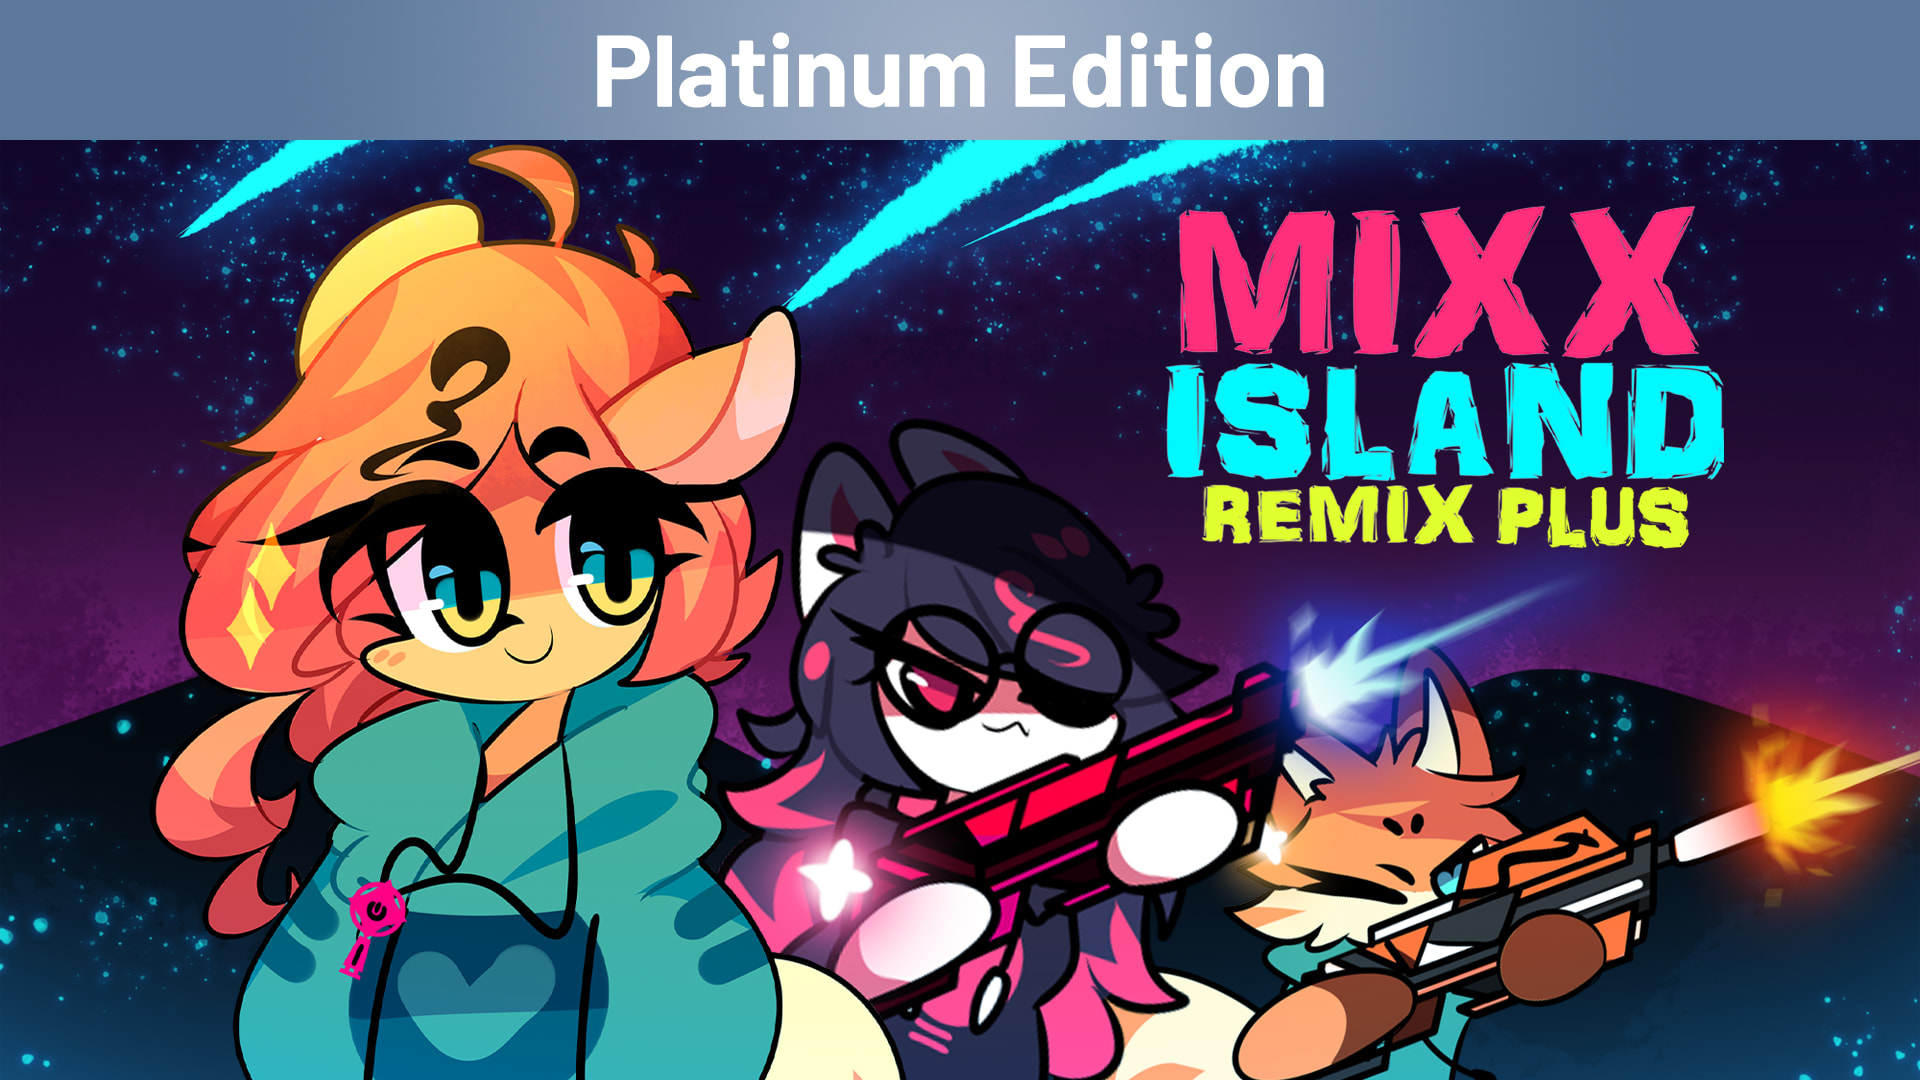 Mixx Island: Remix Plus Platinum Edition